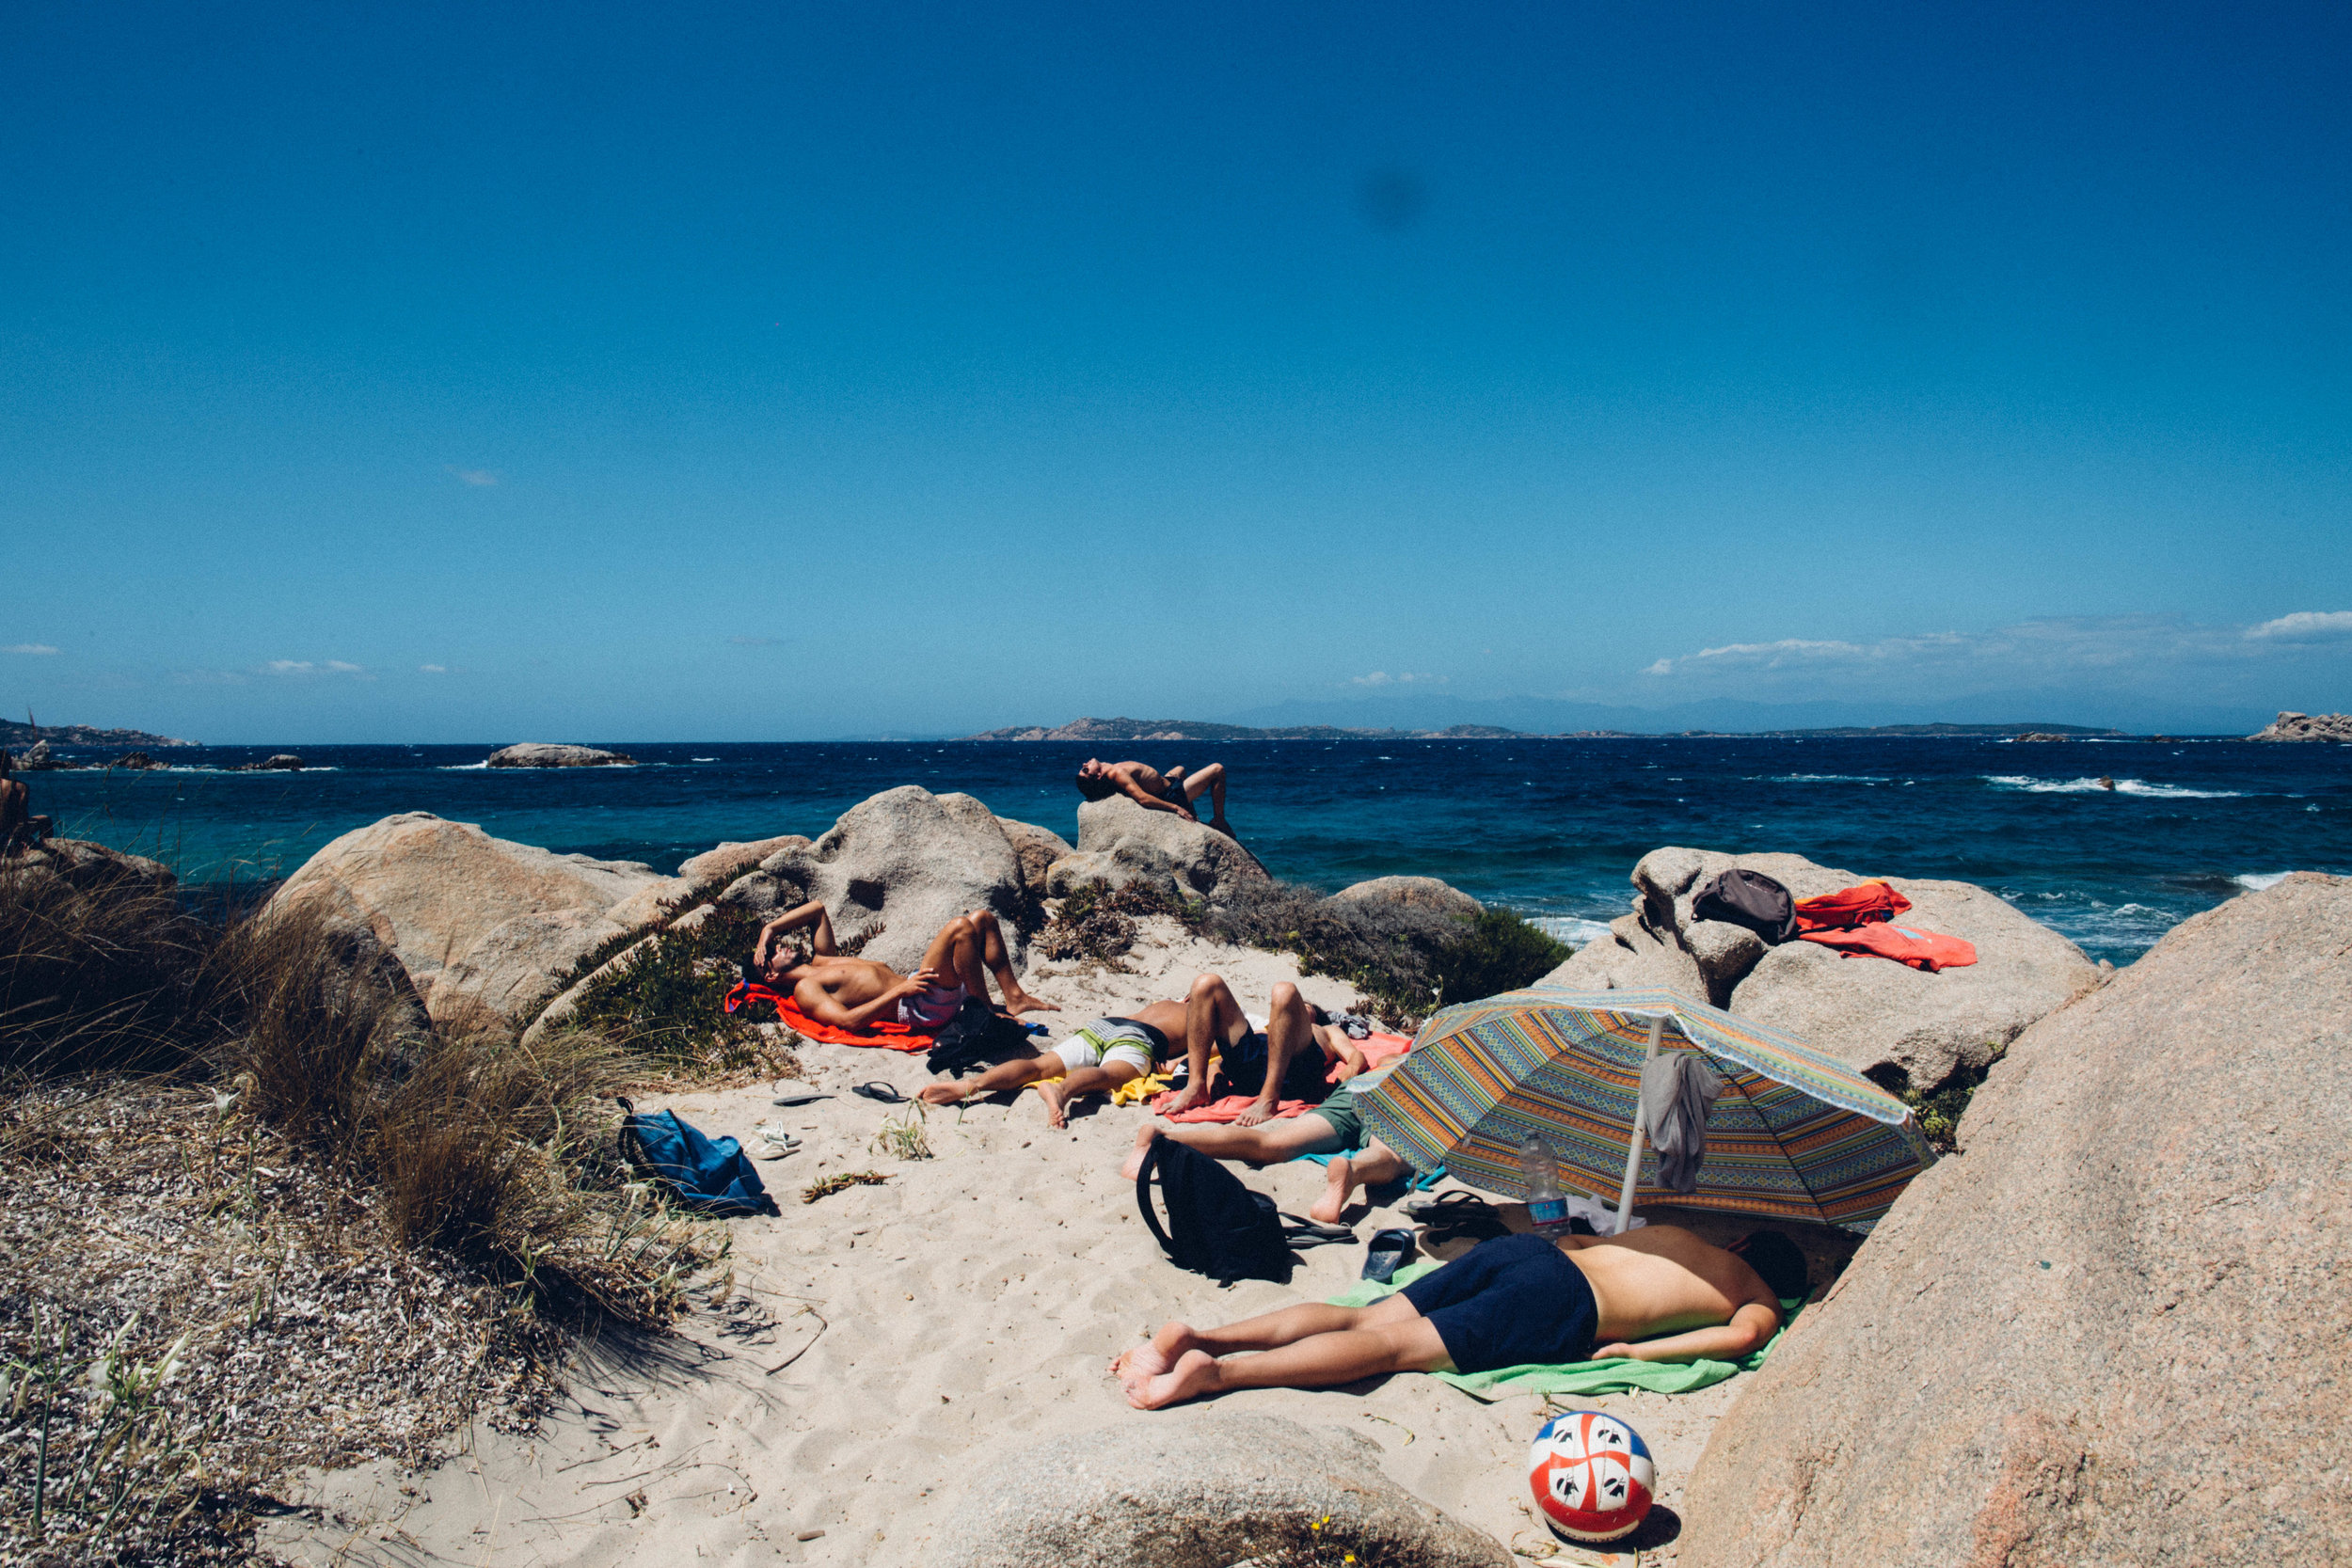   Beachgoers nap at Spiaggia Bassa Trinita in La Maddalena, Sardinia.&nbsp;  